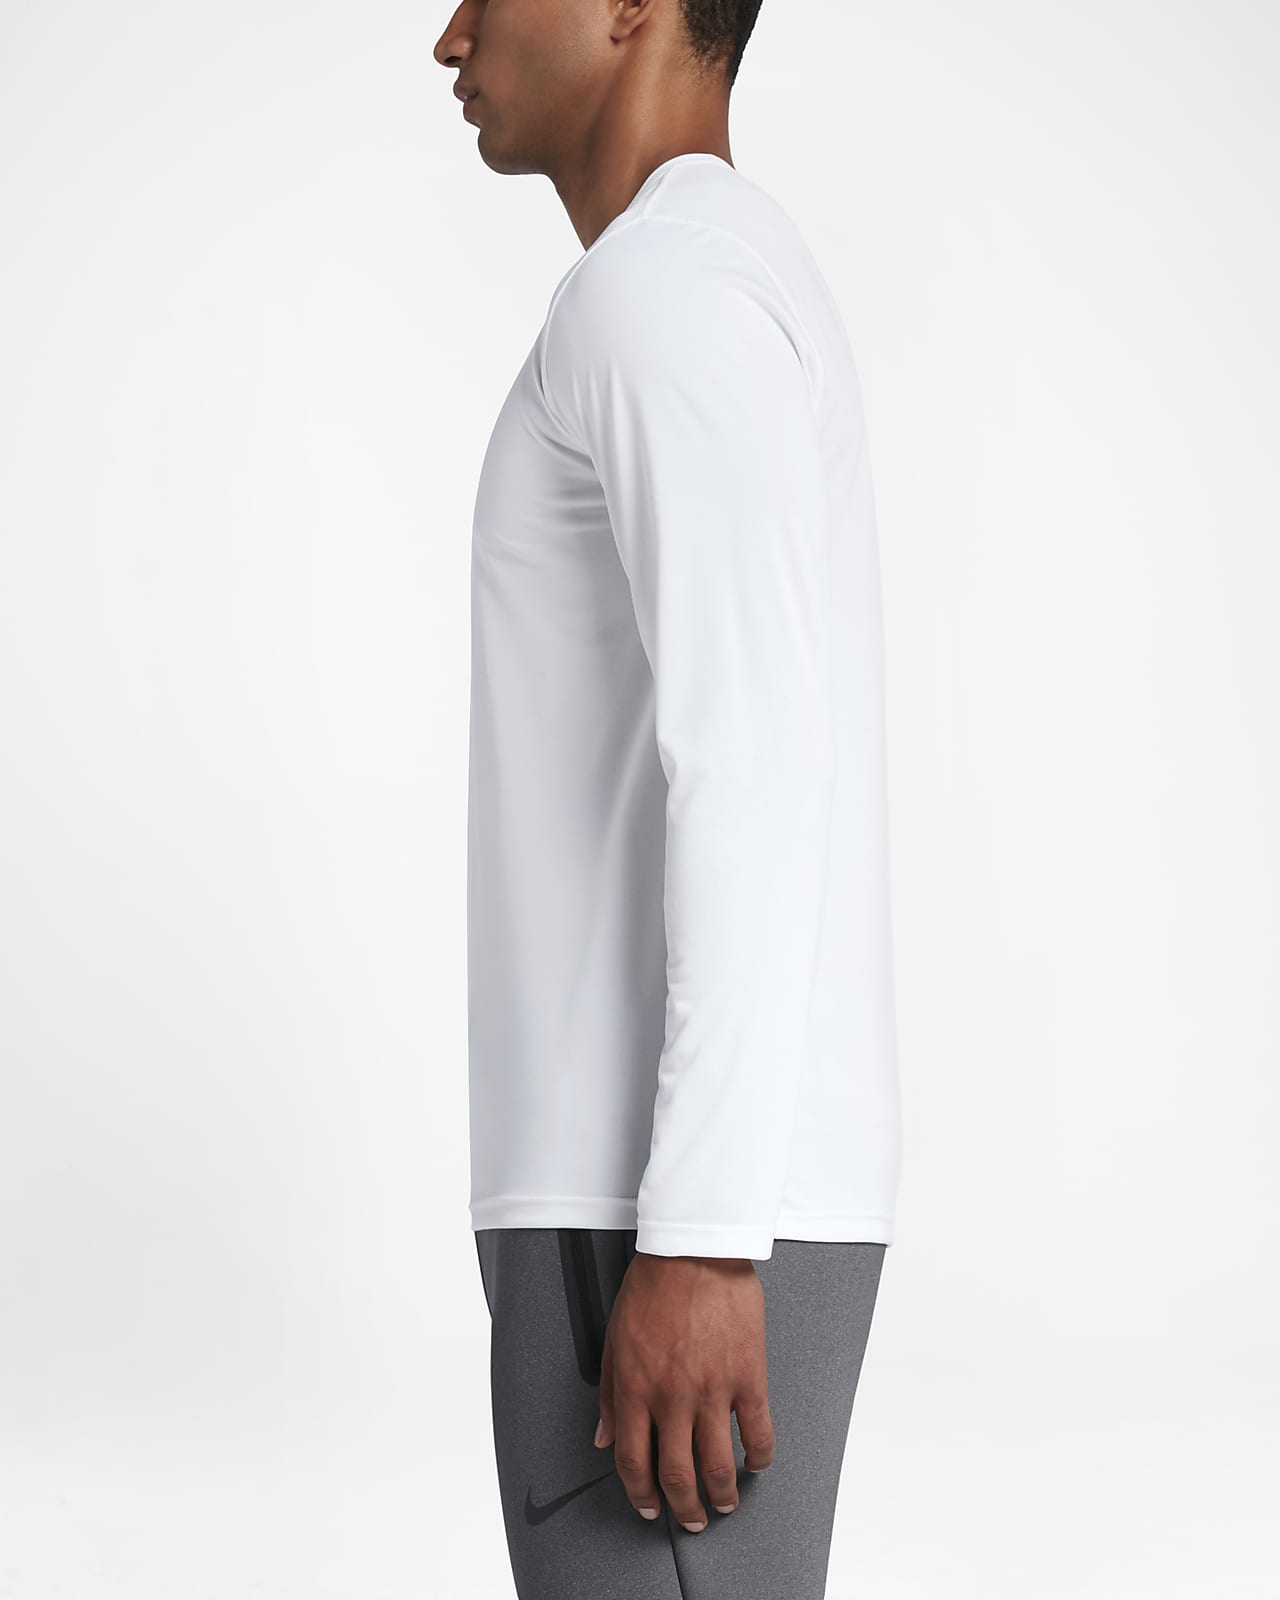 white dri fit long sleeve shirt